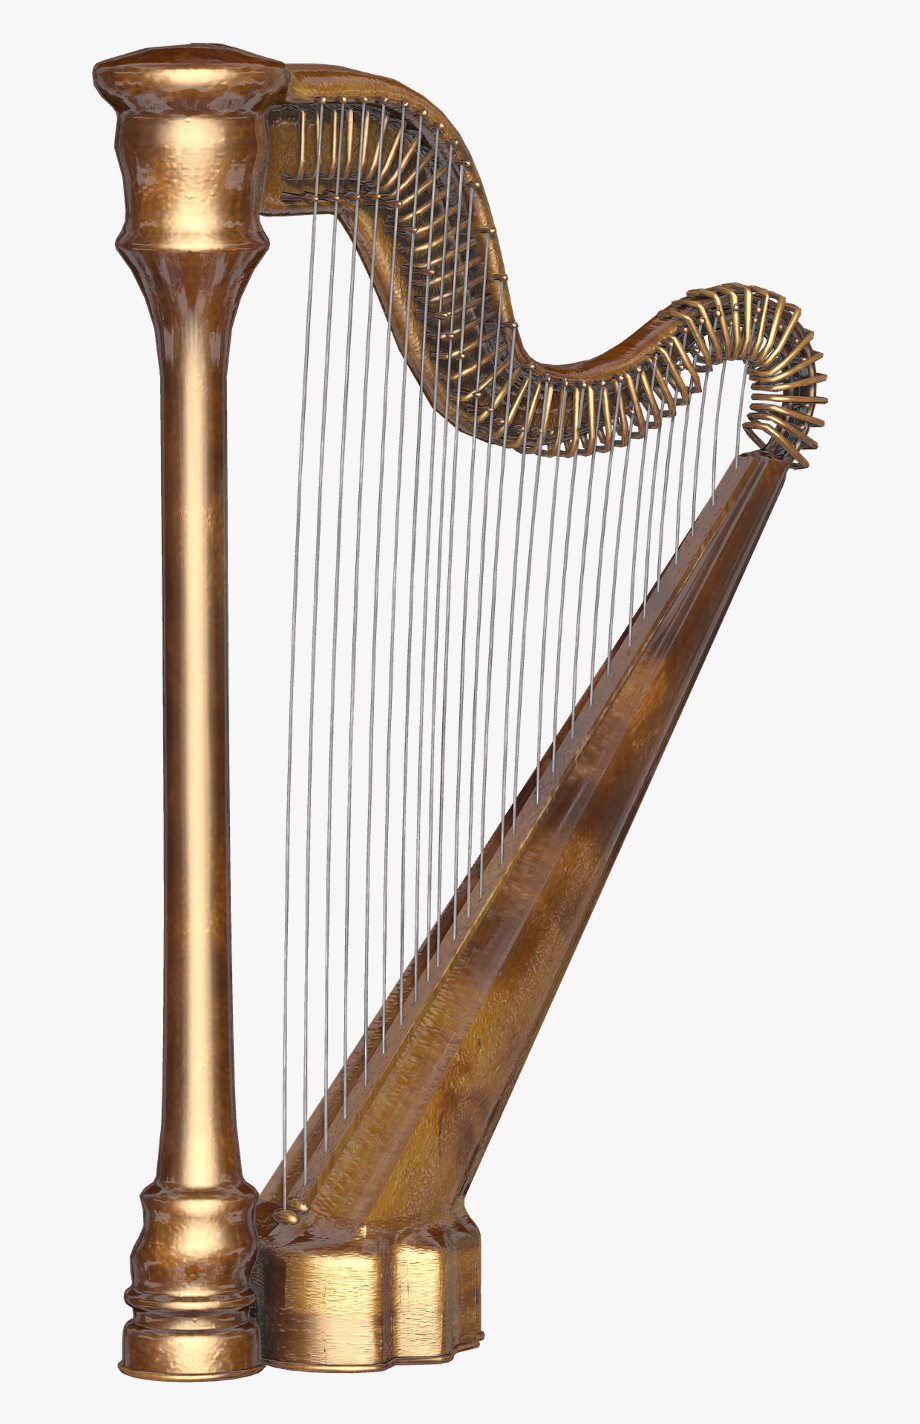 instruments clipart harp